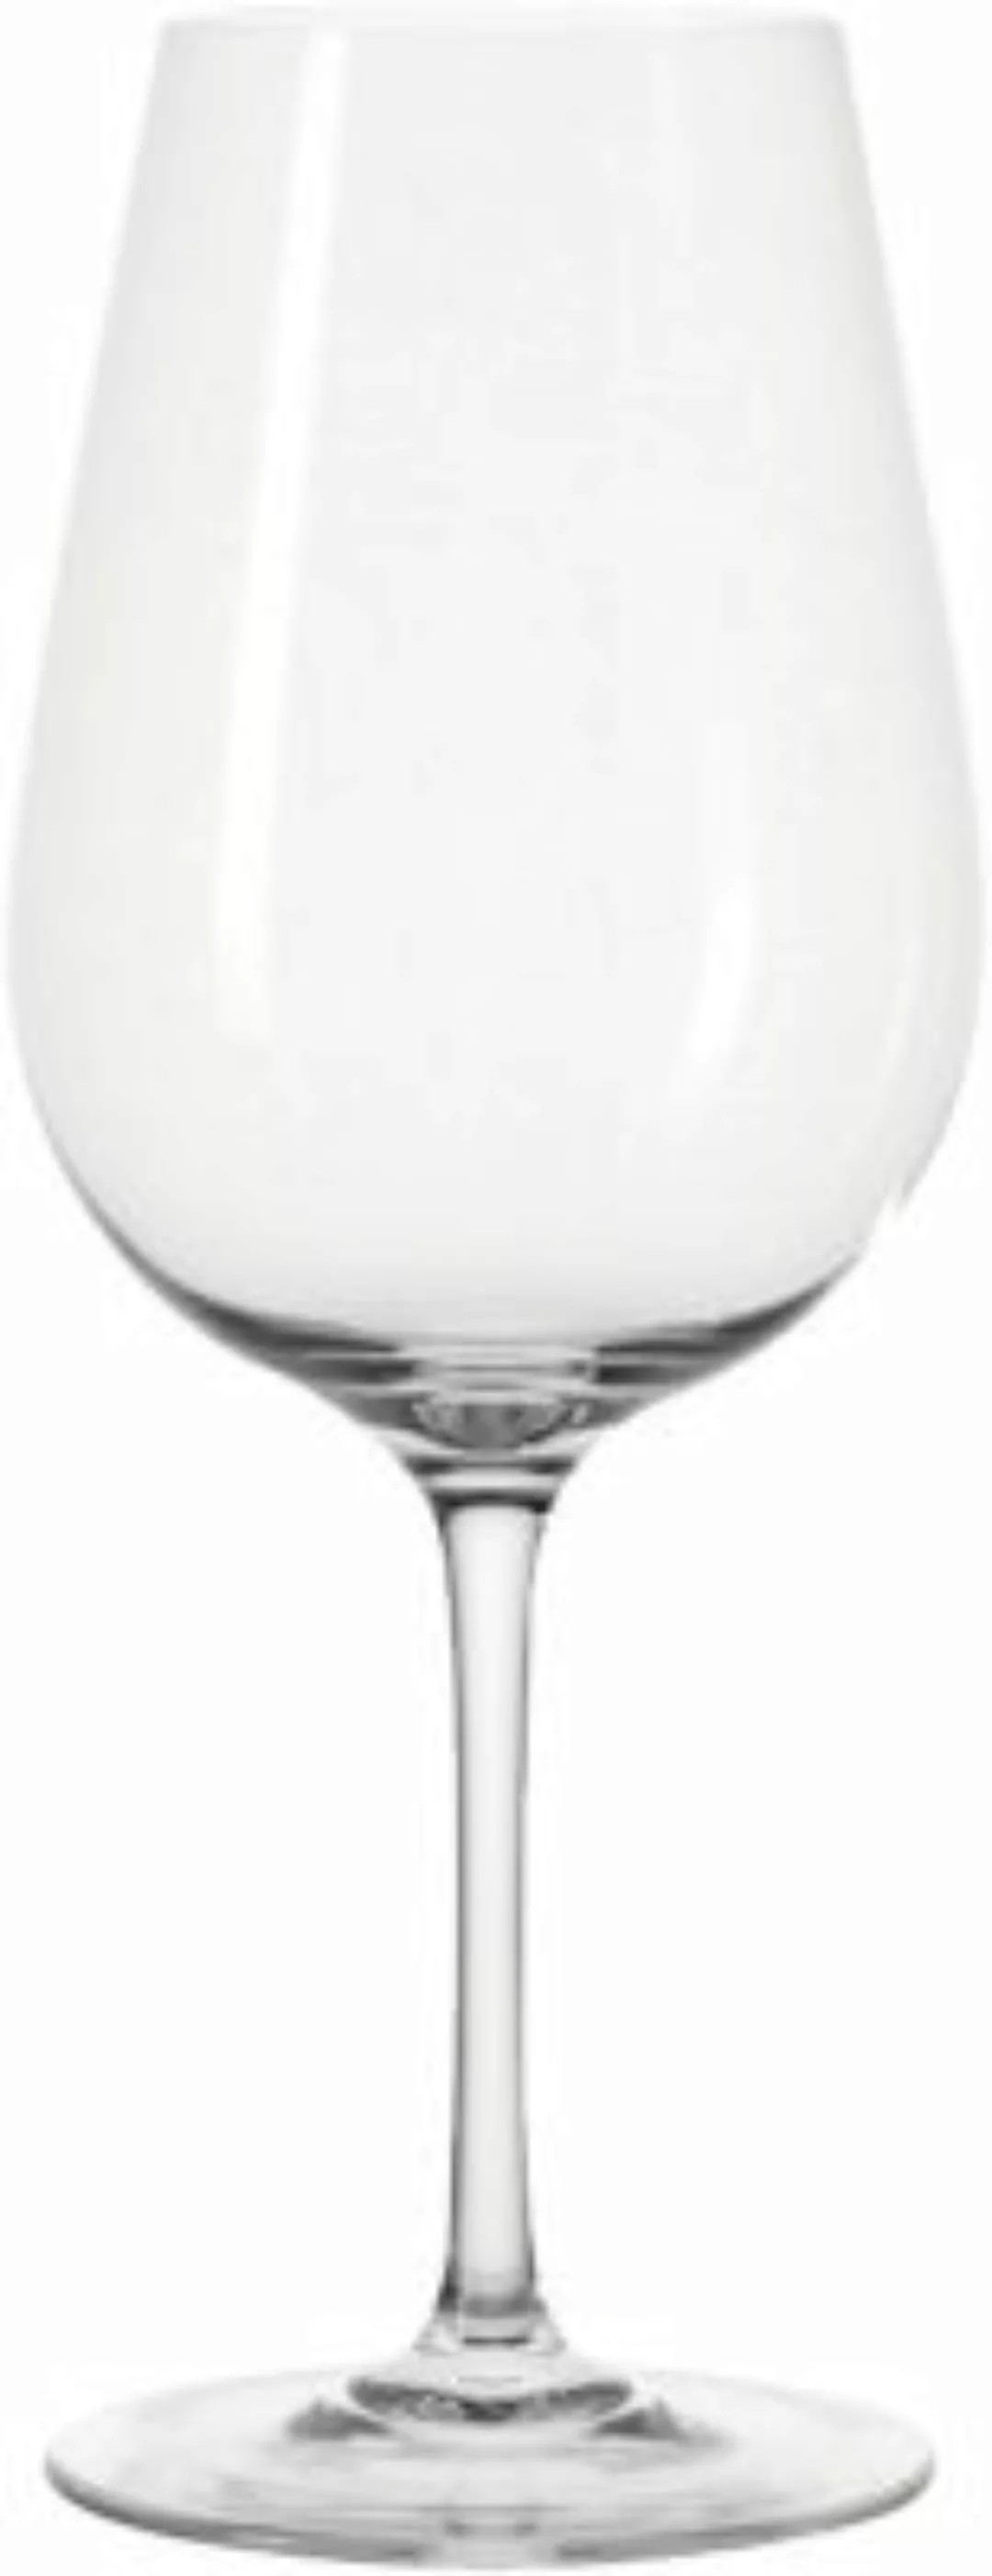 LEONARDO "6er-Set Weißweinglas ""Tivoli""" farblos günstig online kaufen